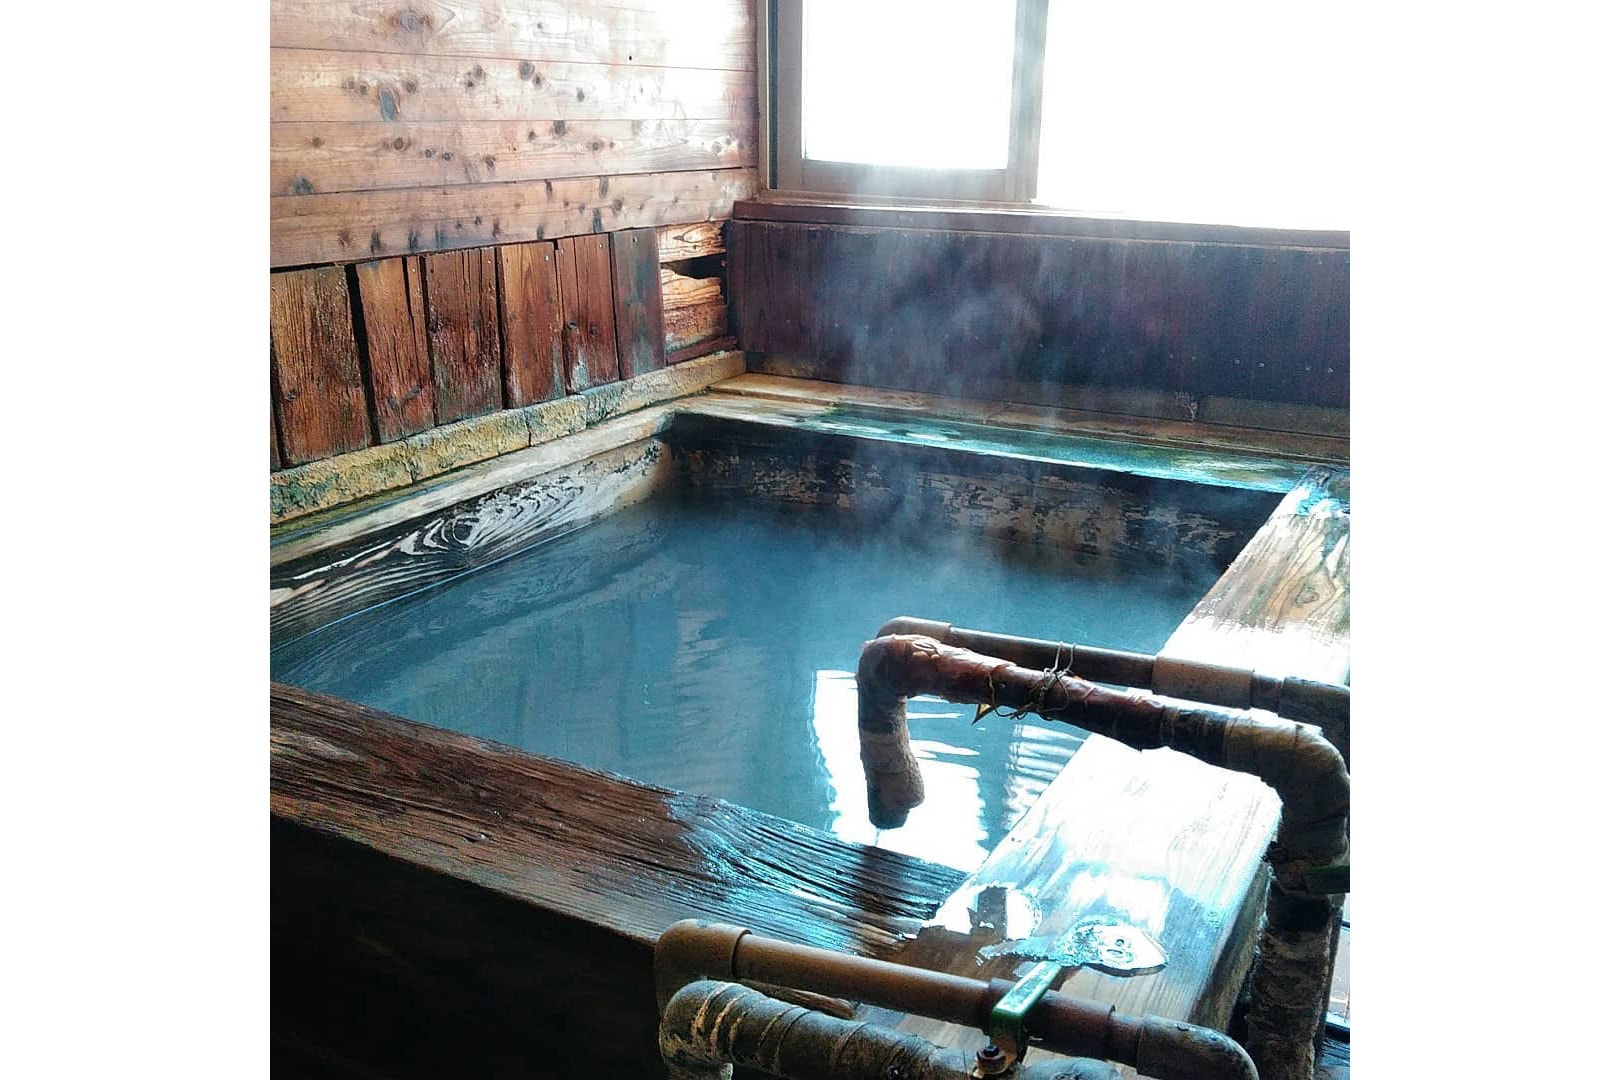 Oimatsu Onsen Dilapidated Building Japan Travel Bathhouse Secret Hidden Explore Mysterious Abandoned Architecture